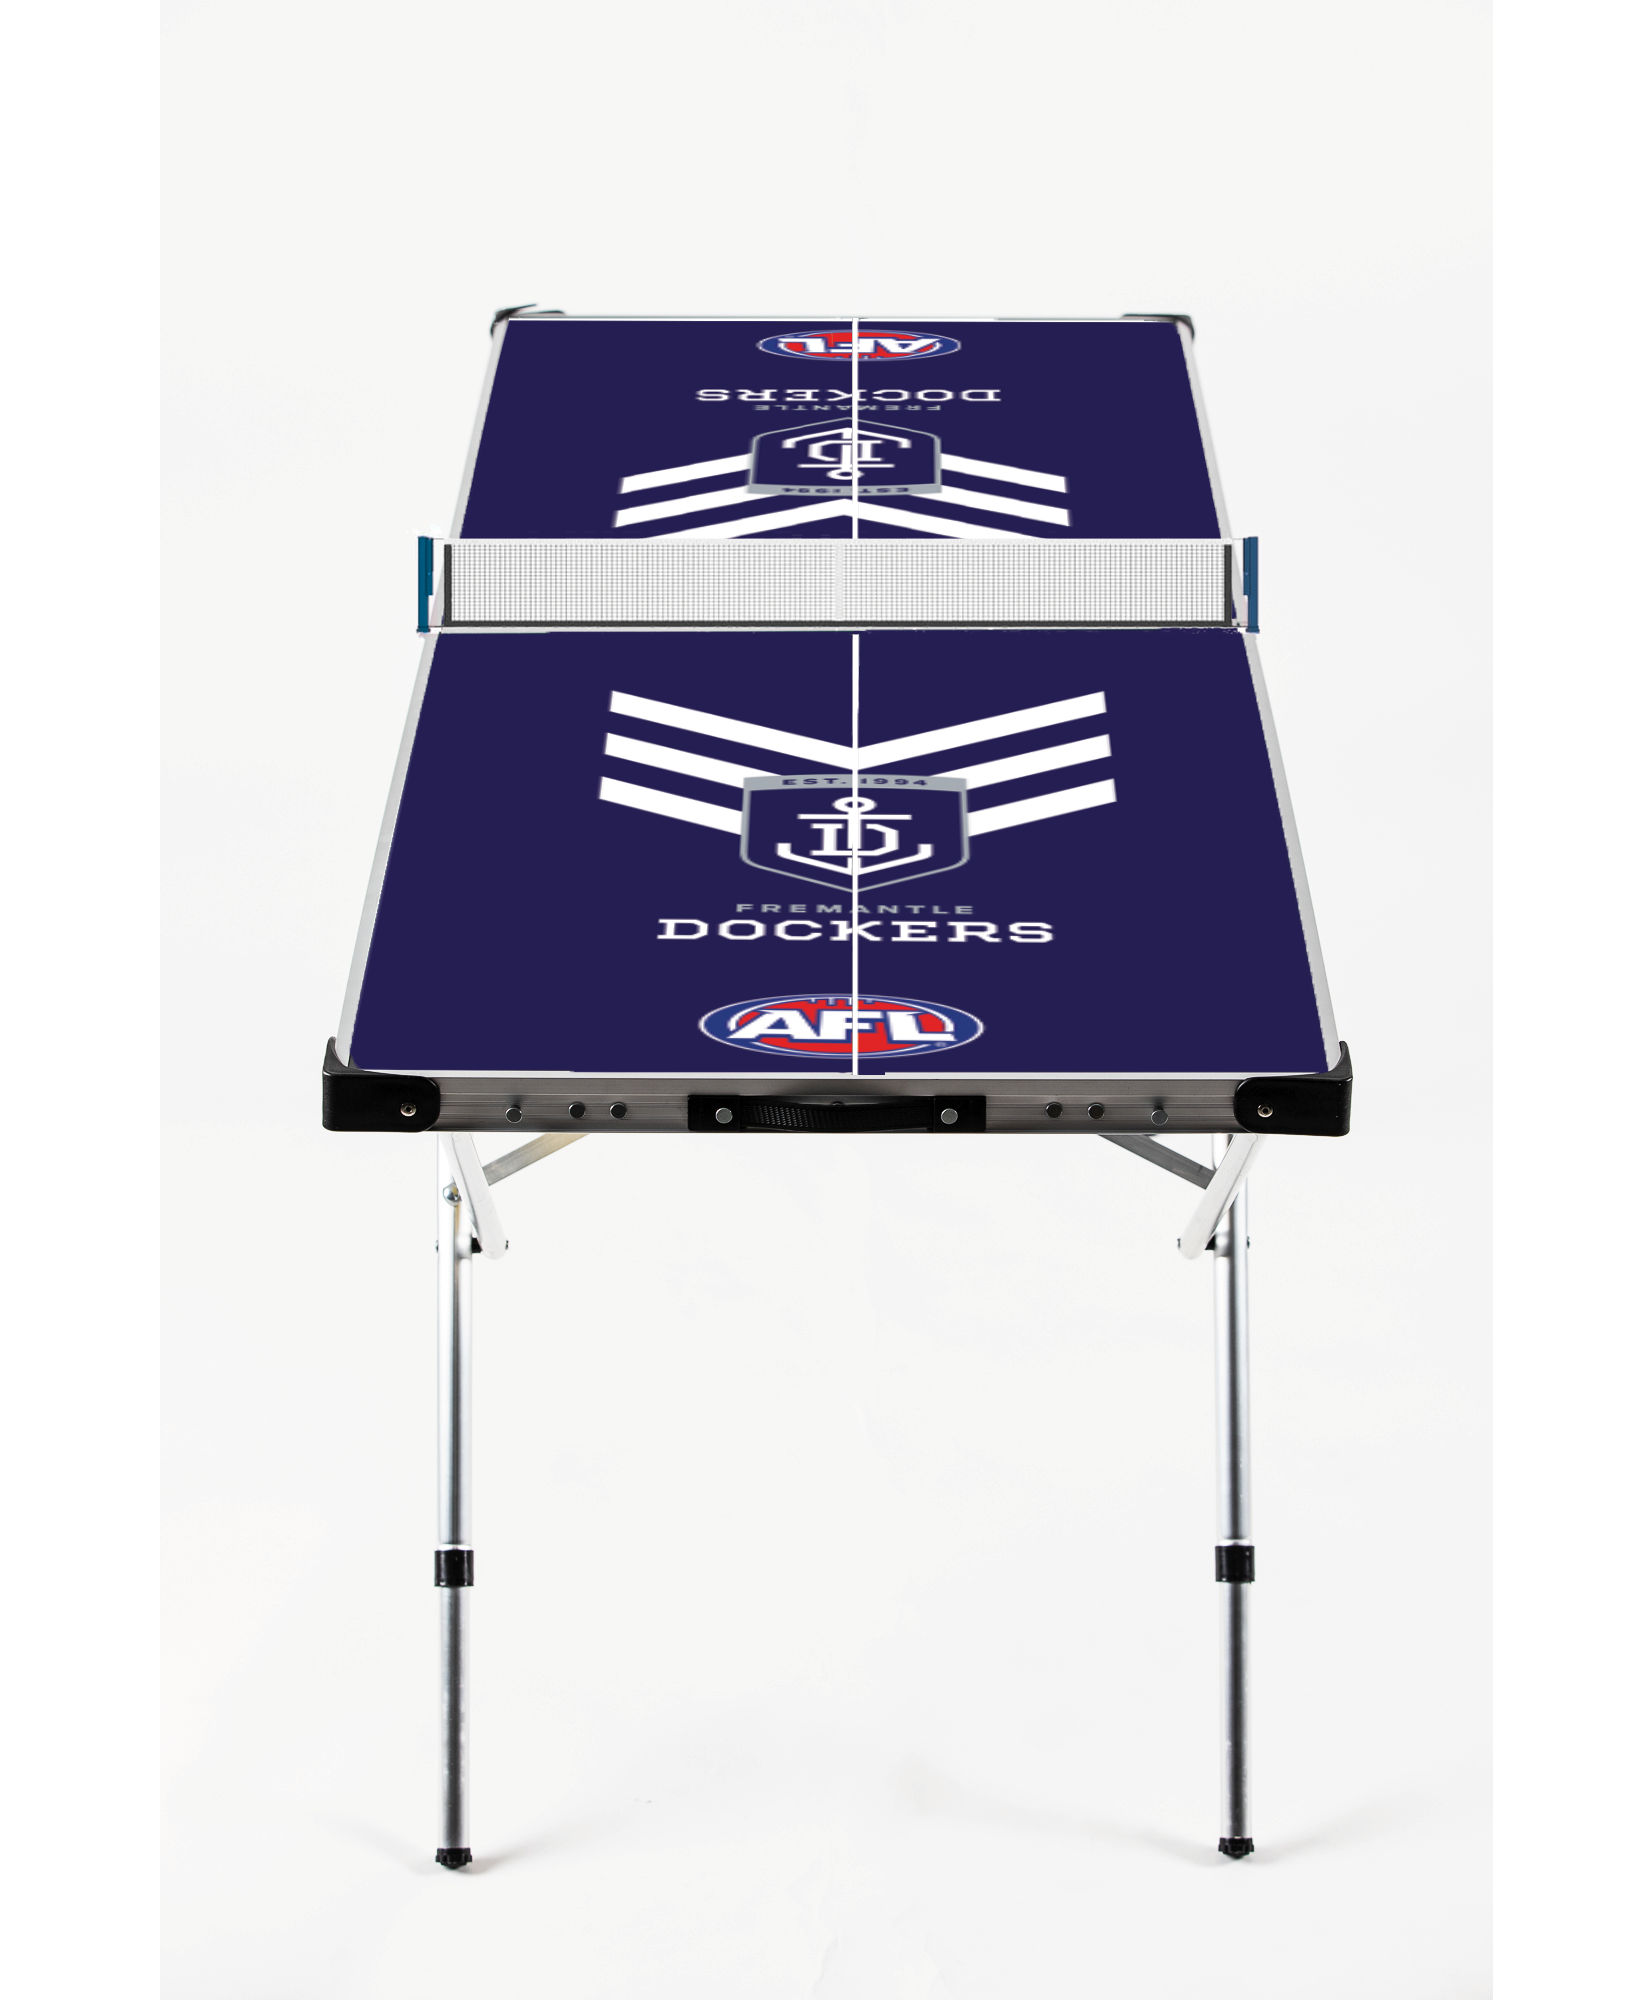 AFL Mini Table Tennis